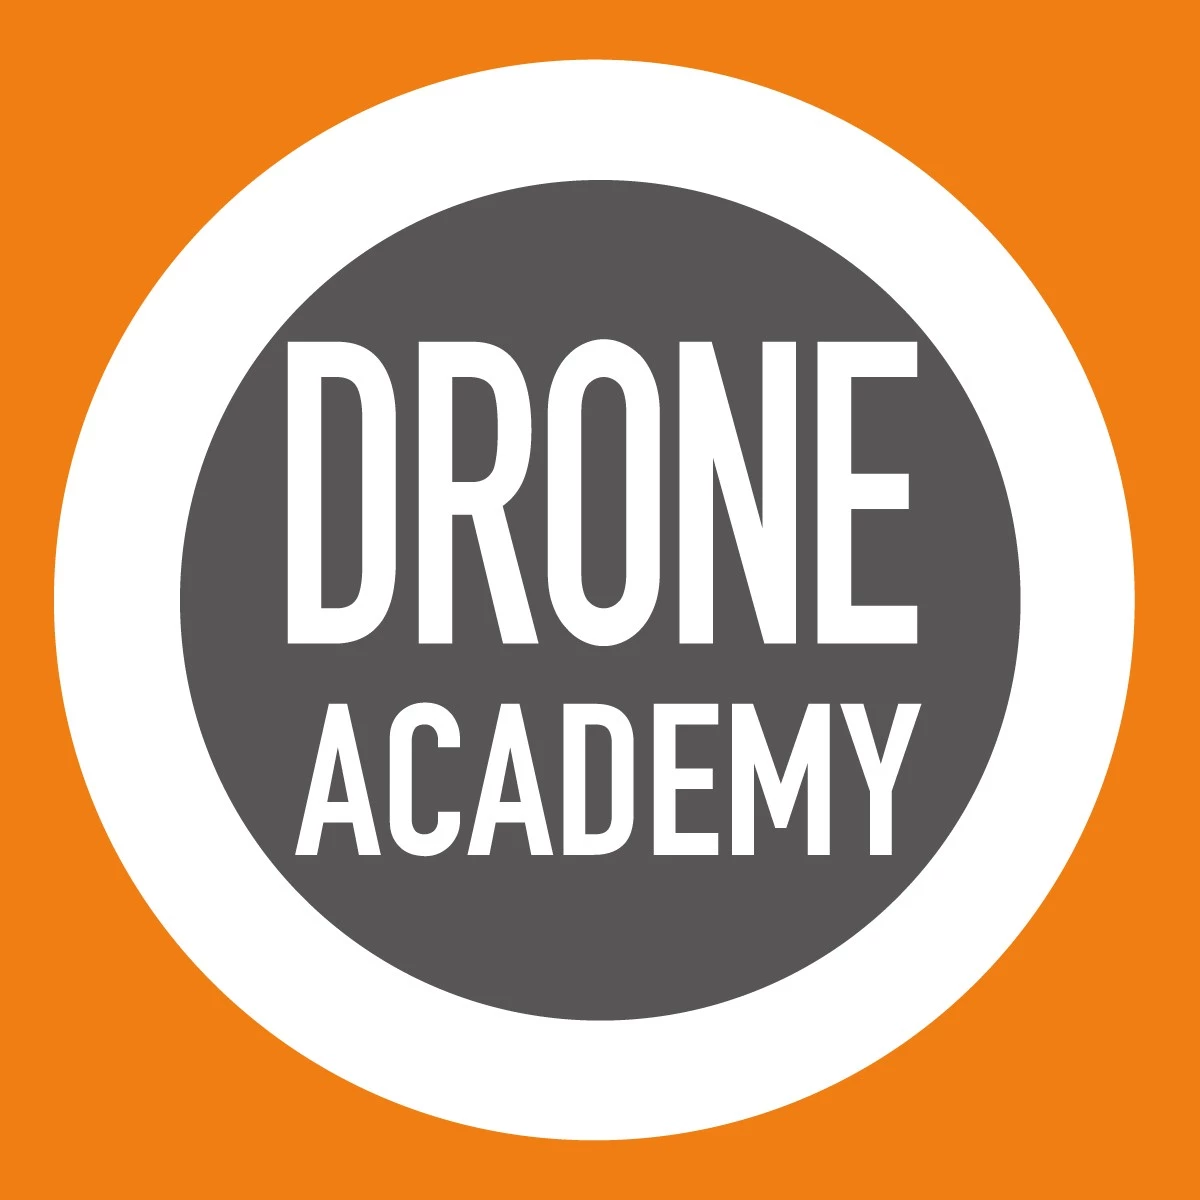 Drone Academy Logo.jpg